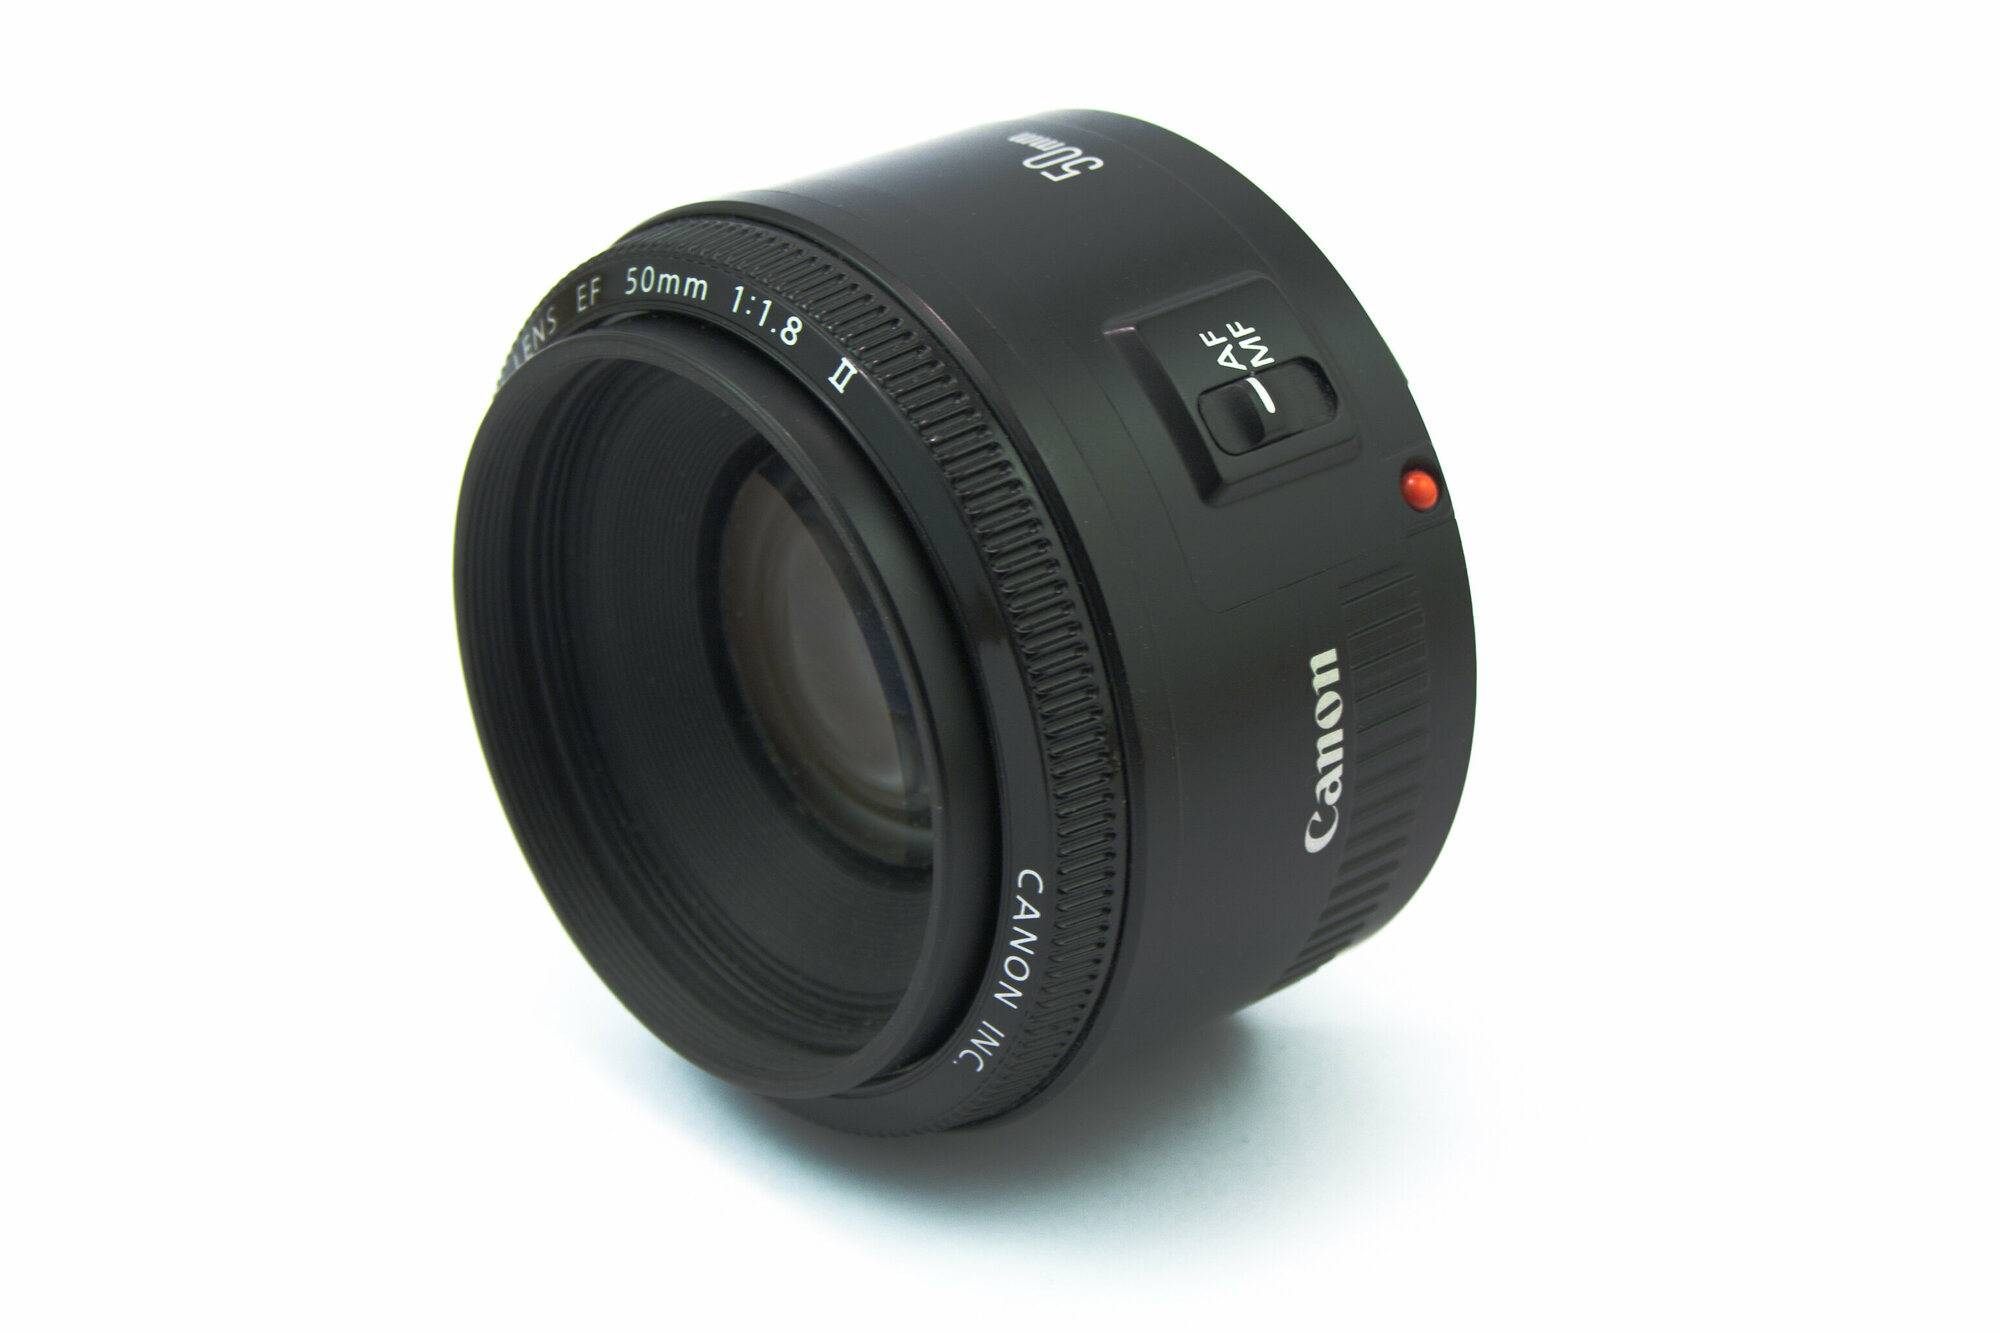 Фотоаппарат Canon 70D kit 50mm 1.8 II